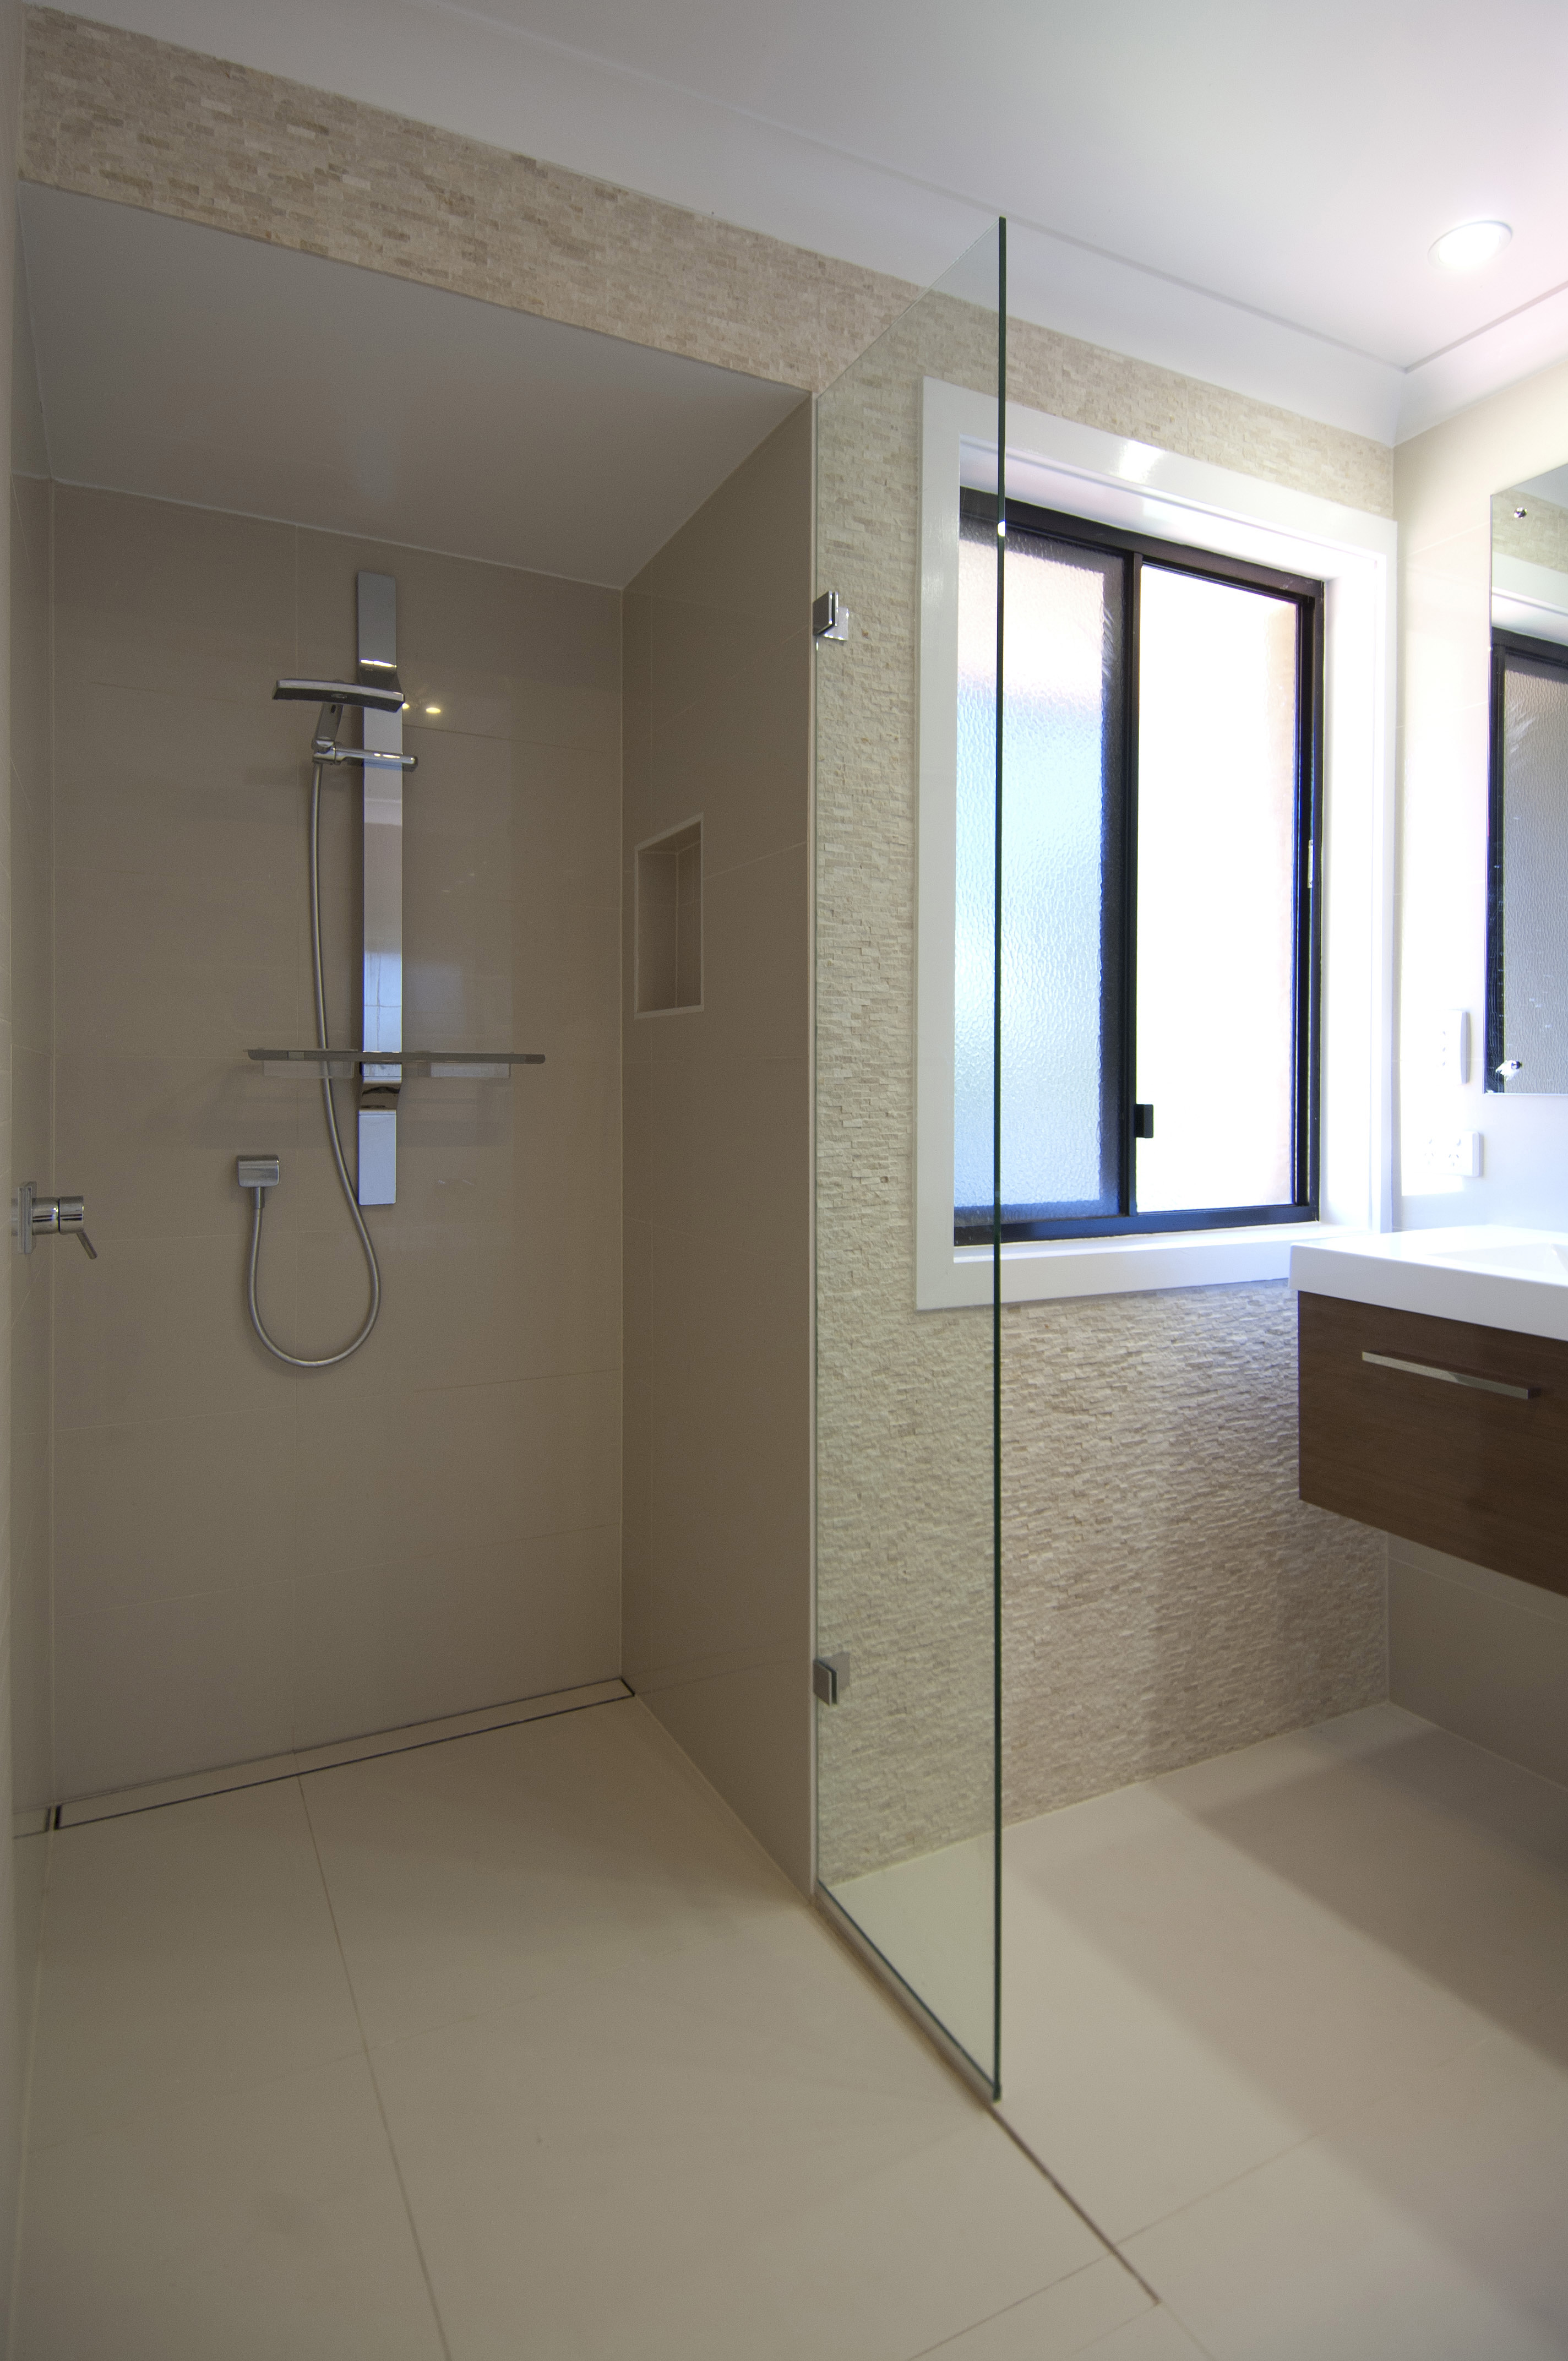 Pullenvale bathroom walk in shower tile insert strip grate